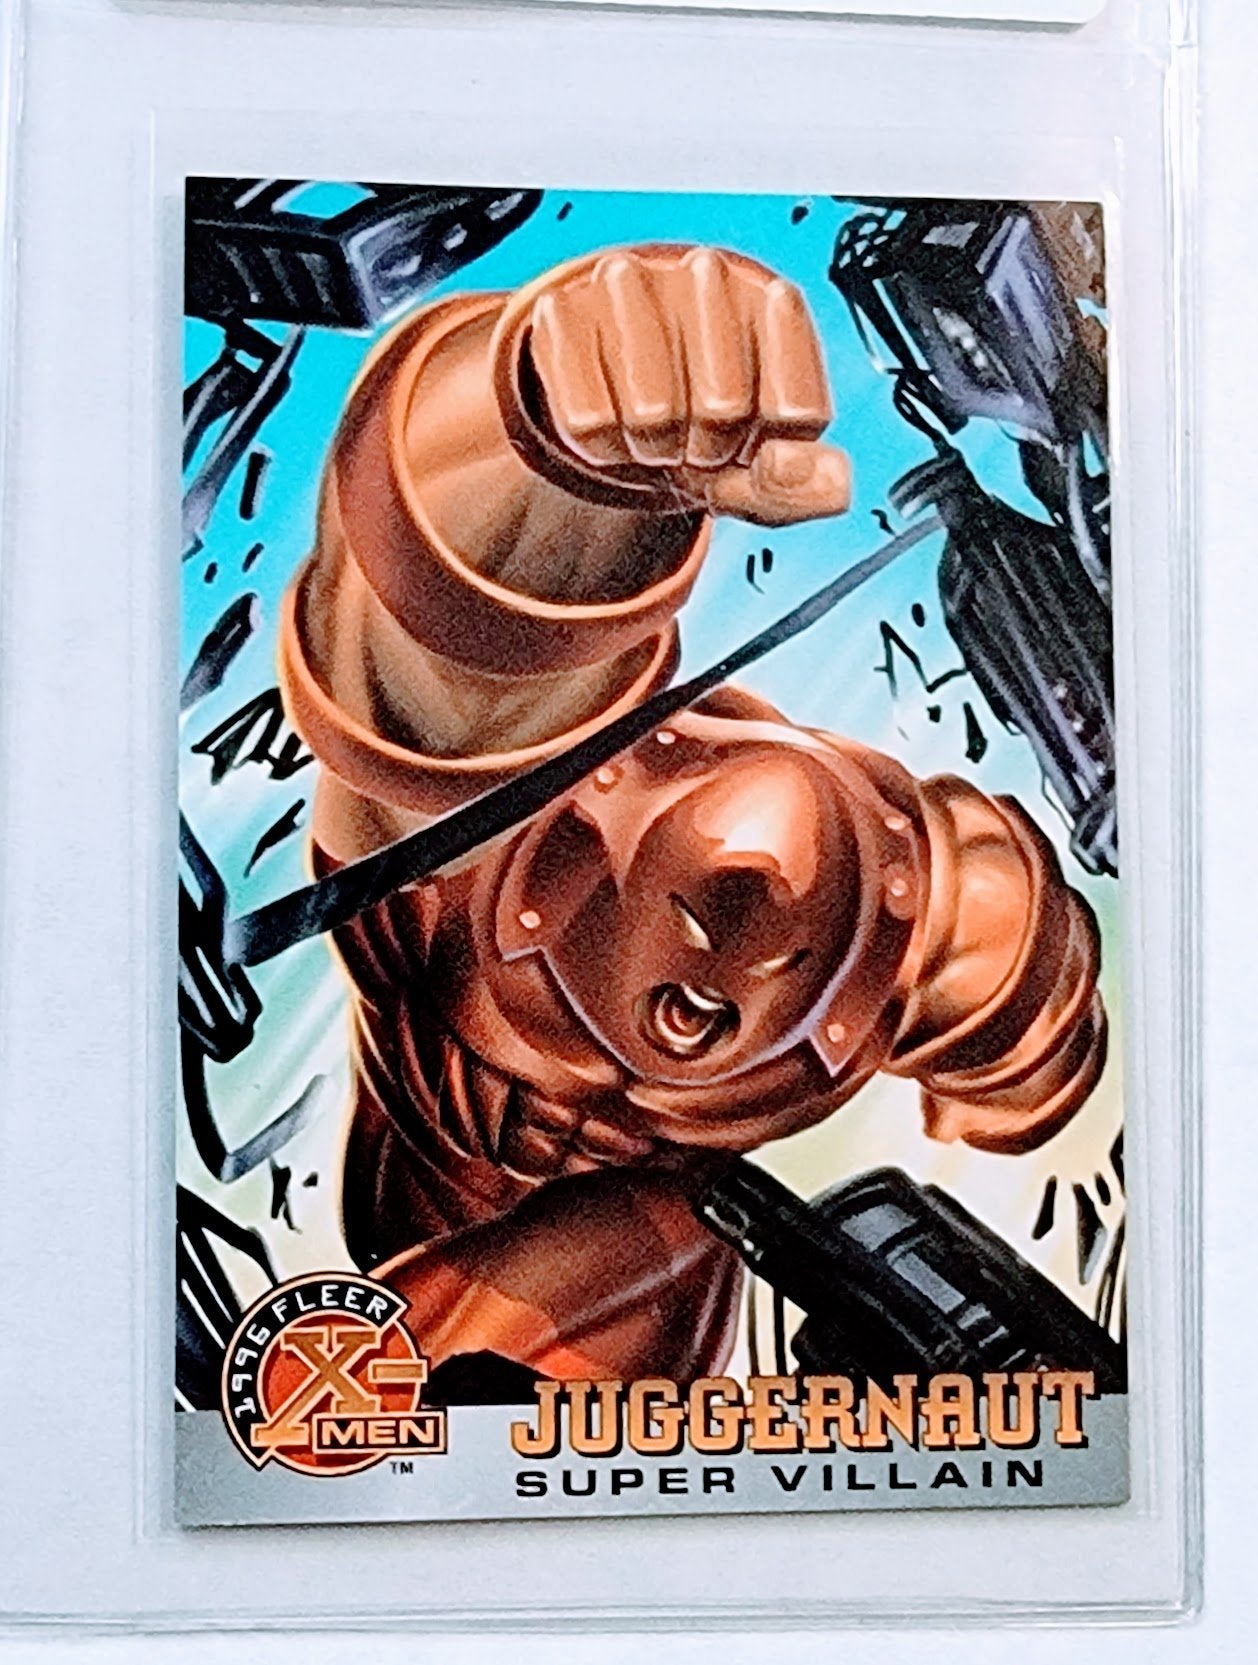 1996 Fleer X-Men Juggernaut Super Villain Marvel Trading Card VG 2AVM1 simple Xclusive Collectibles   